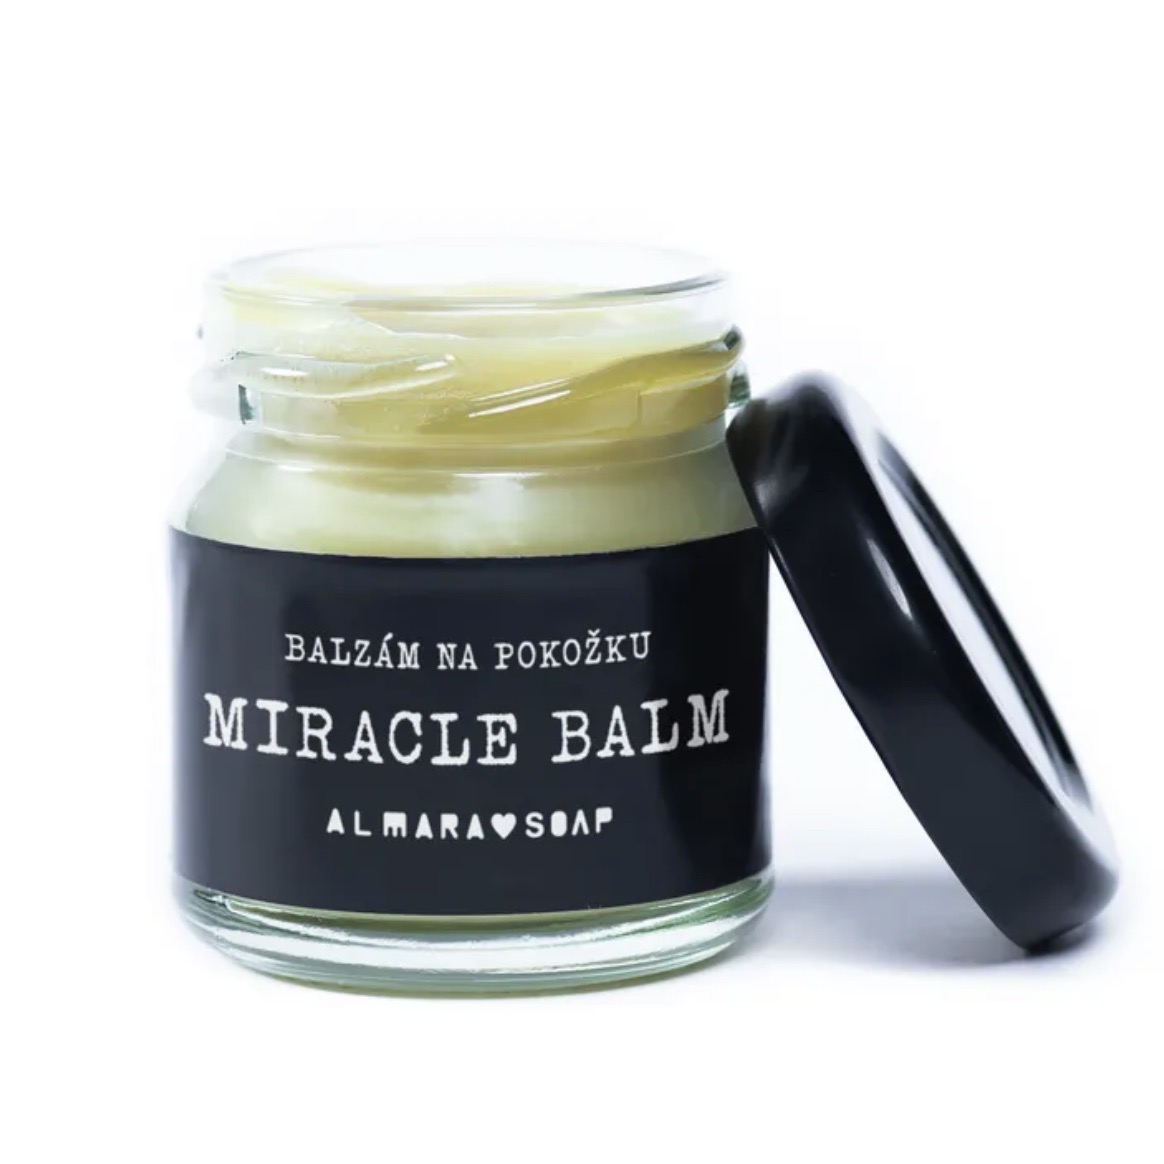 Balzam Miracle balm - Almara Soap